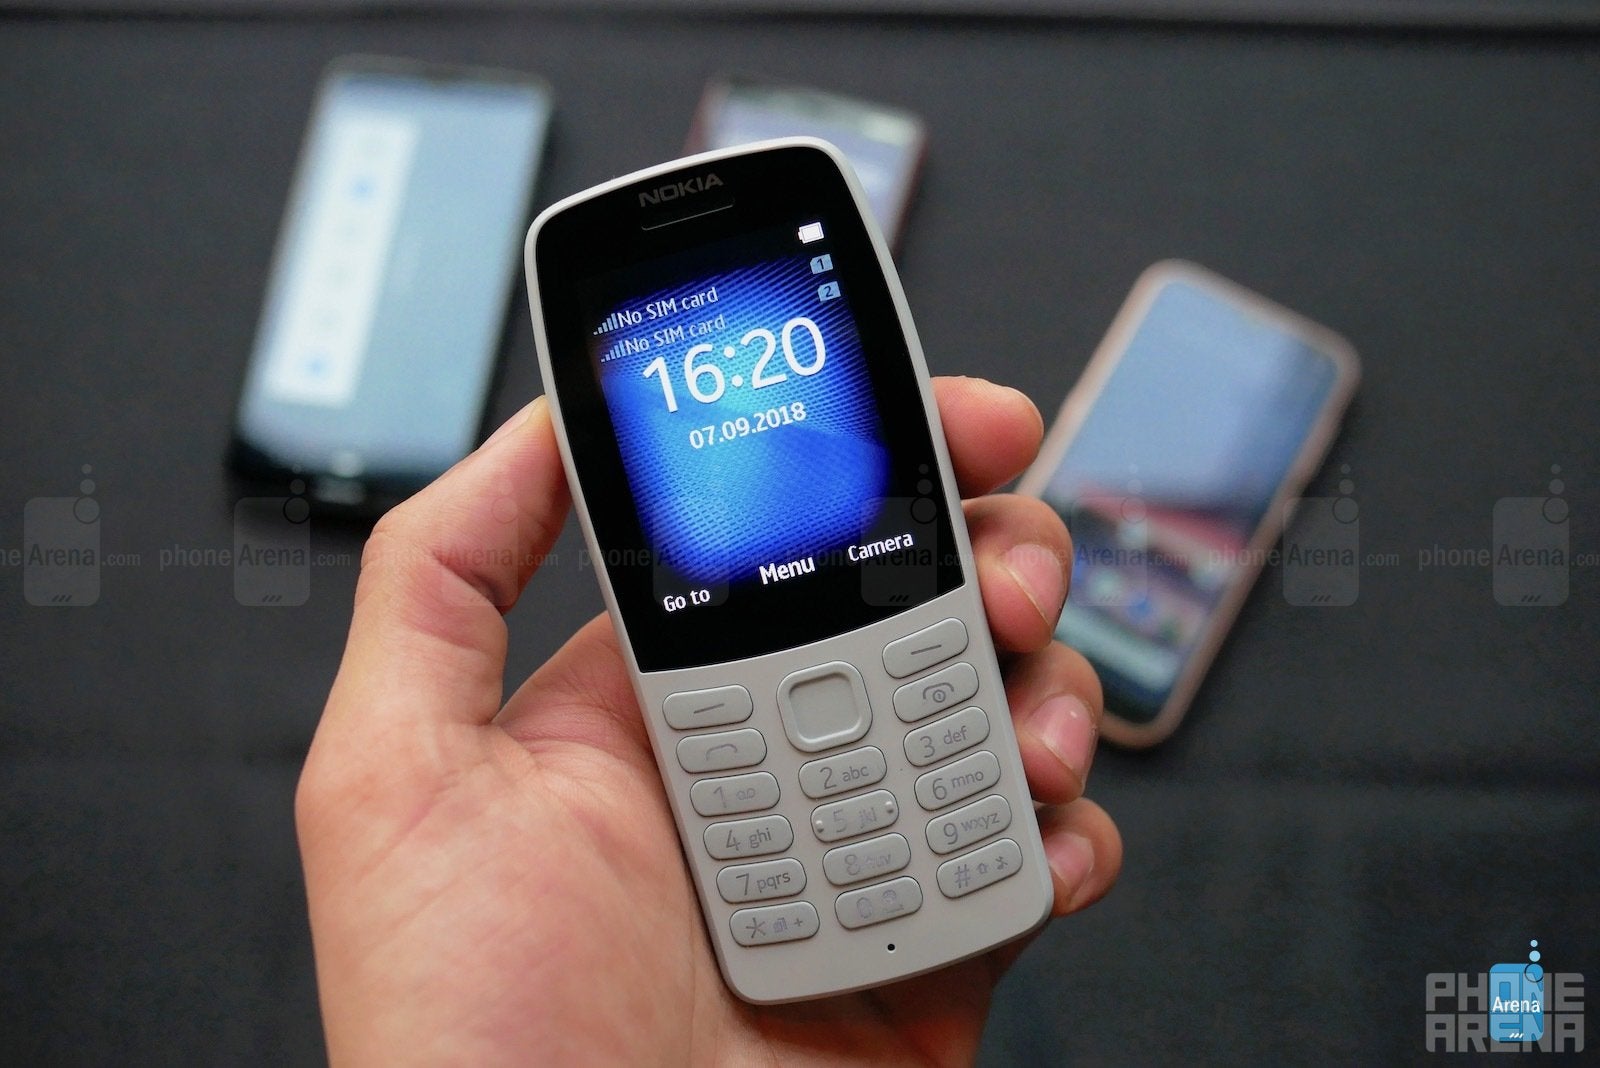 Nokia 4.2, Nokia 3, Nokia 1 Plus, and Nokia 210 hands-on: A range of mid-rangers, featuring the 210!